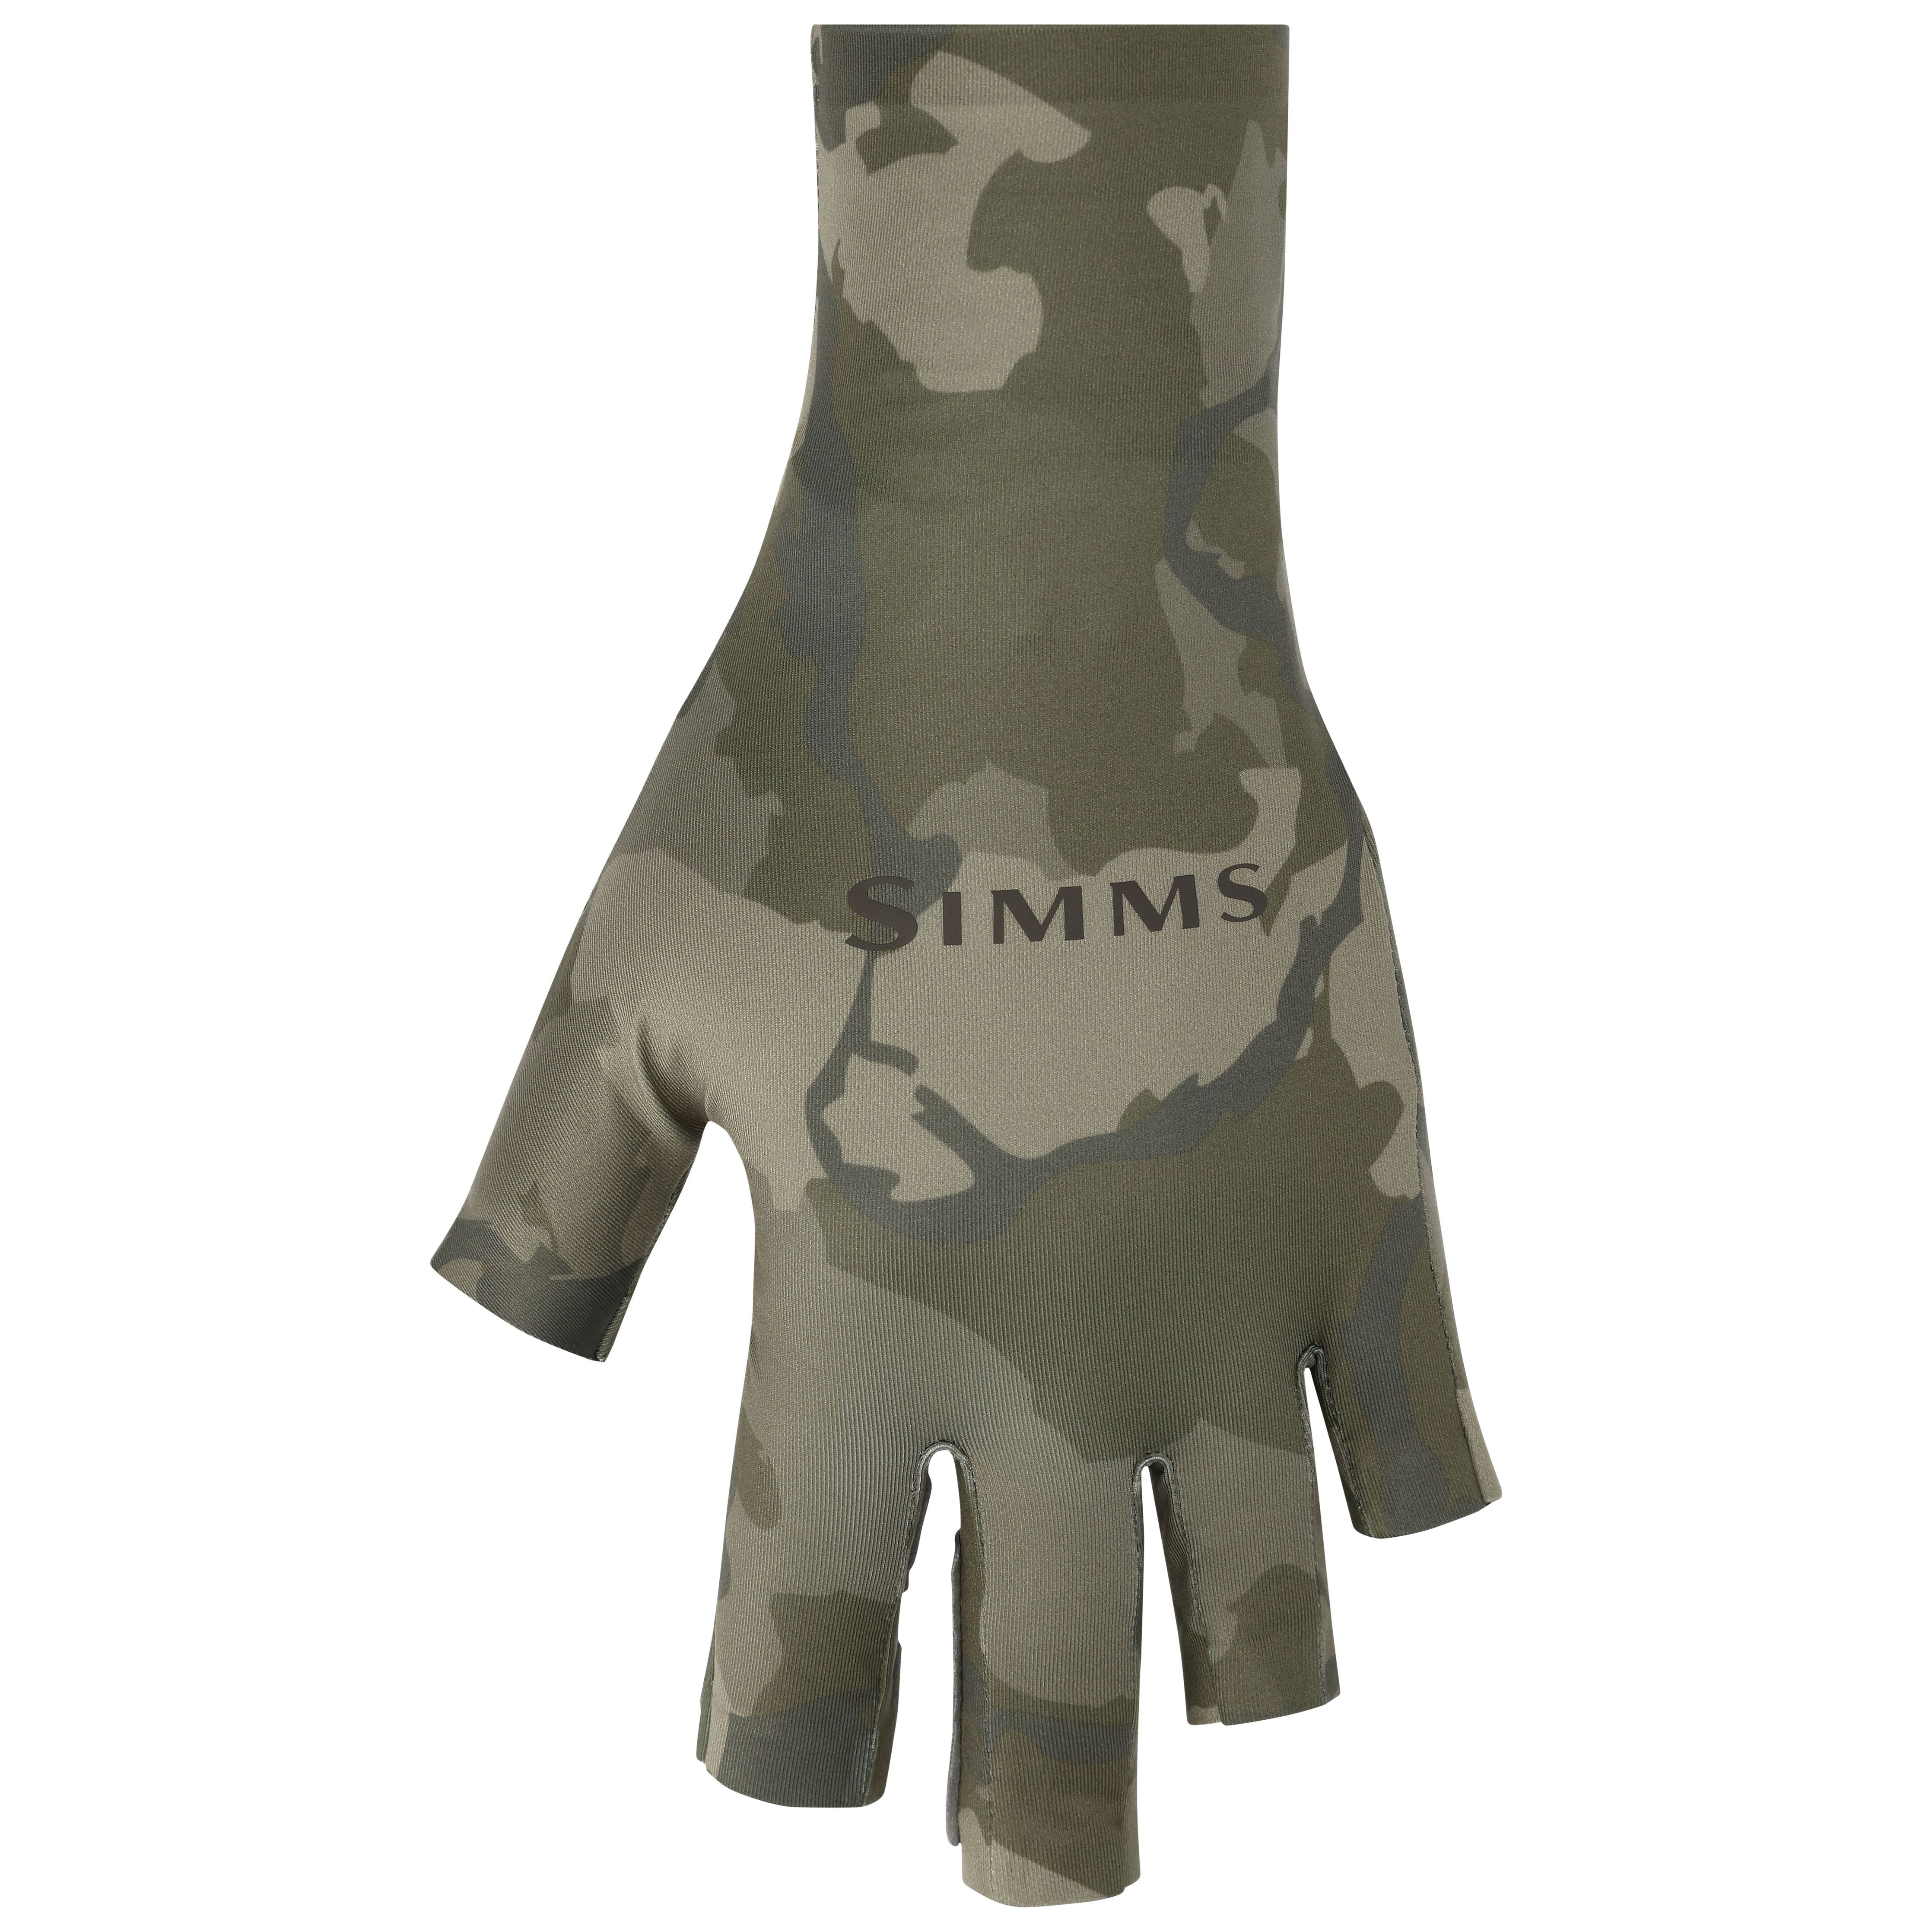 Simms SolarFlex SunGlove Regiment Camo Olive Drab Image 01